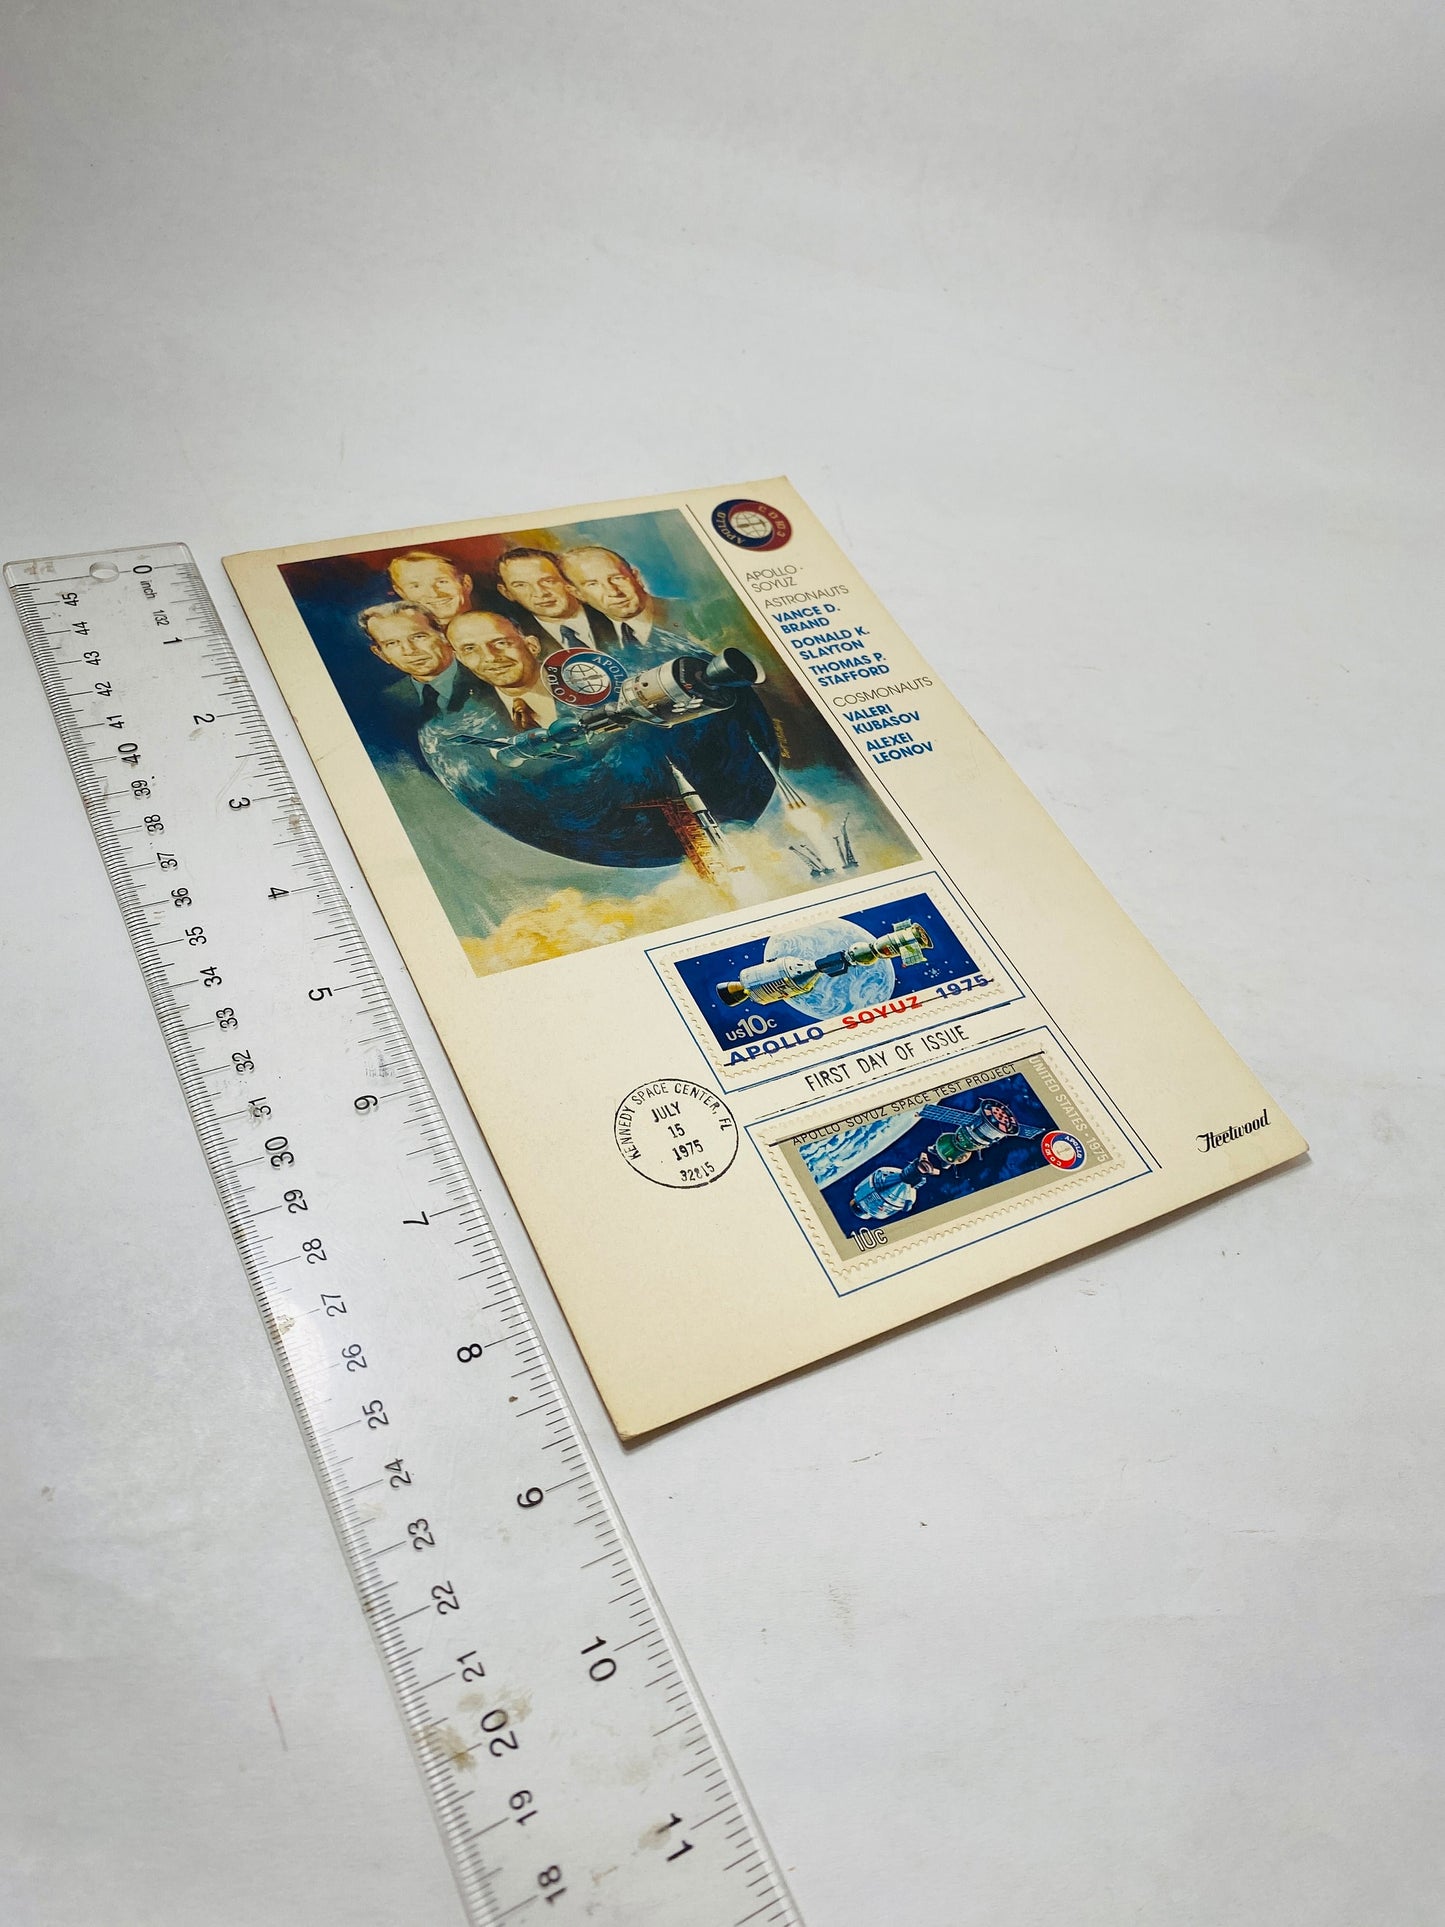 1975 Apollo Soyuz Stamps First Day of Issue Tom Stafford Alexei Leonov NASA space moon Collectible gift decor